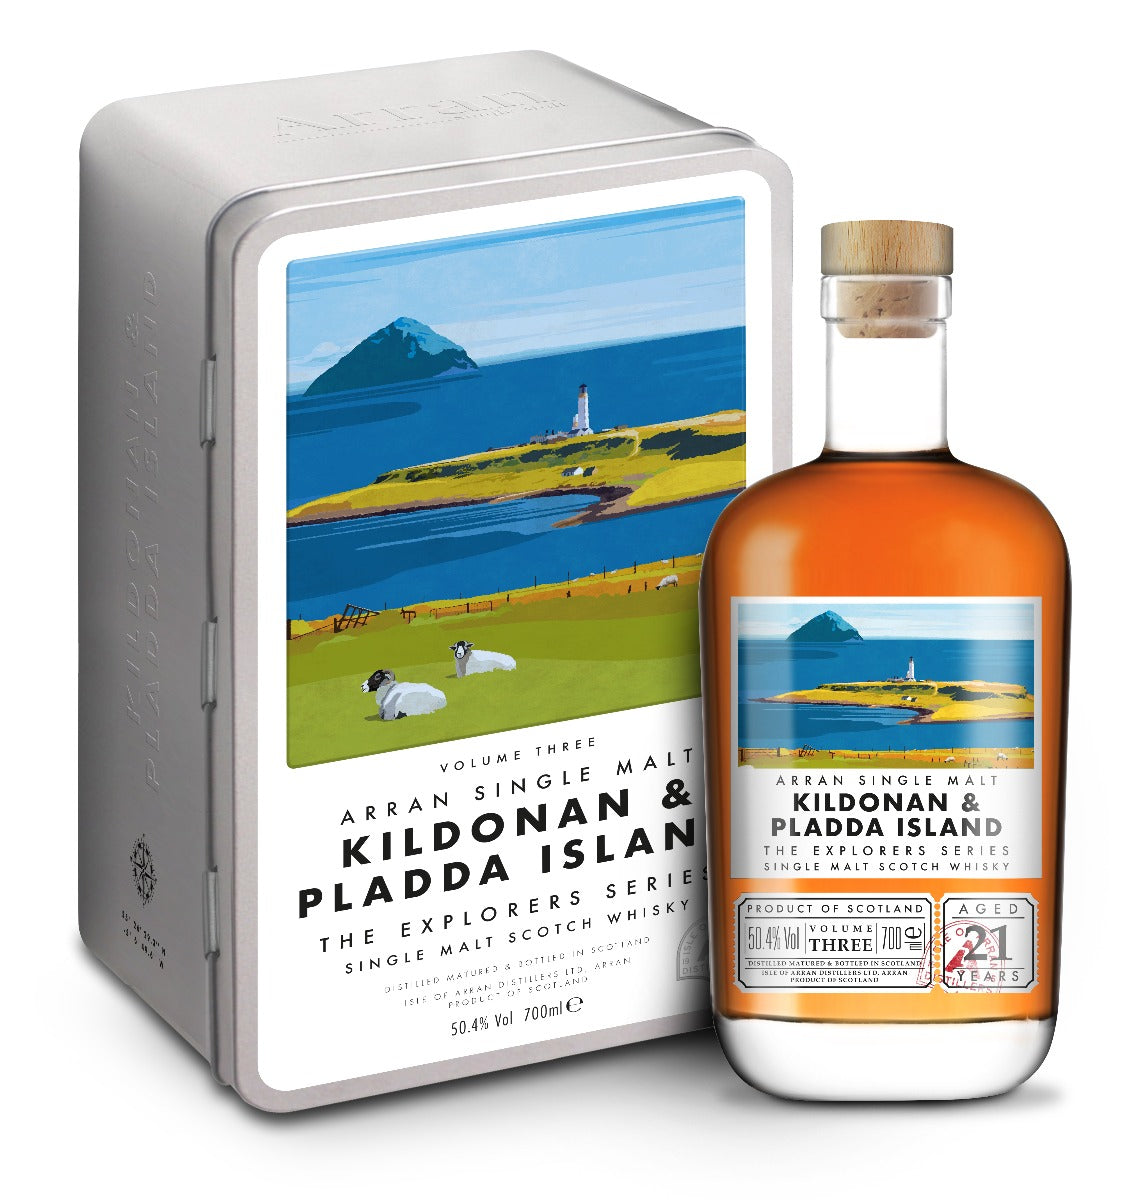 Arran Single Malt Kildonan & Pladda Island - The Explores Series - 21 år 50,4%